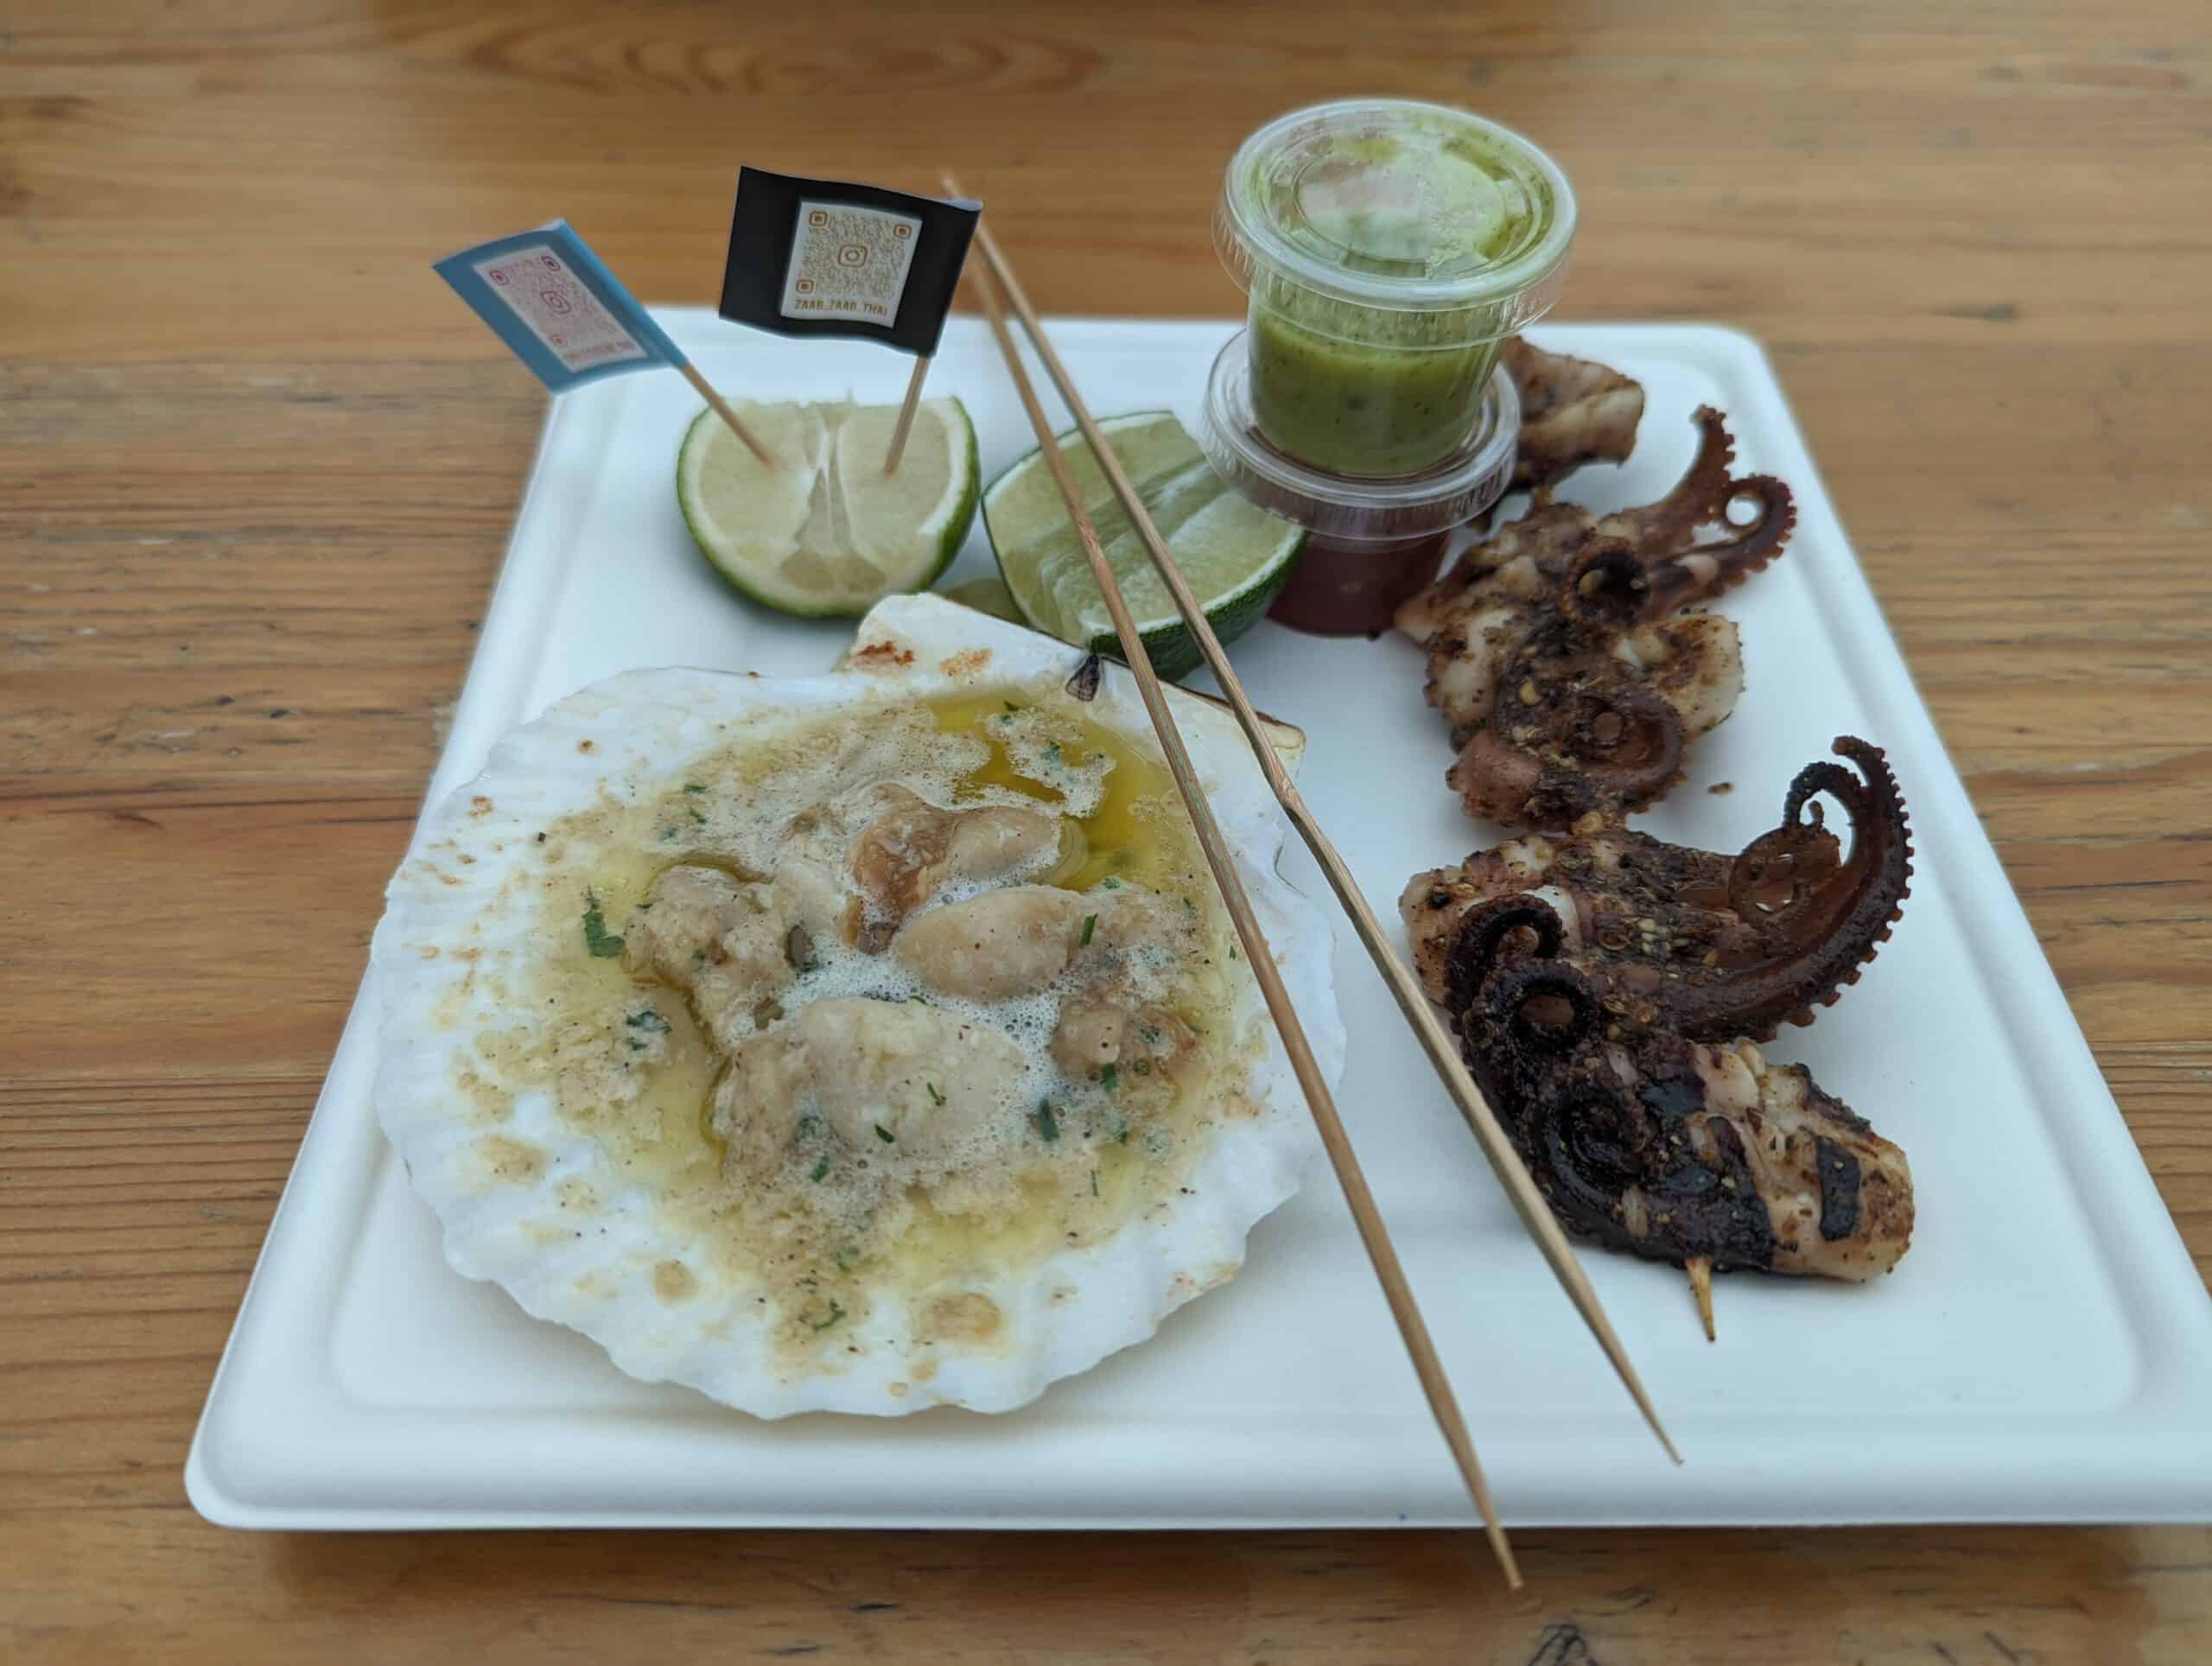 Grilled octopus frying pan adventures cheap eats dubai 92